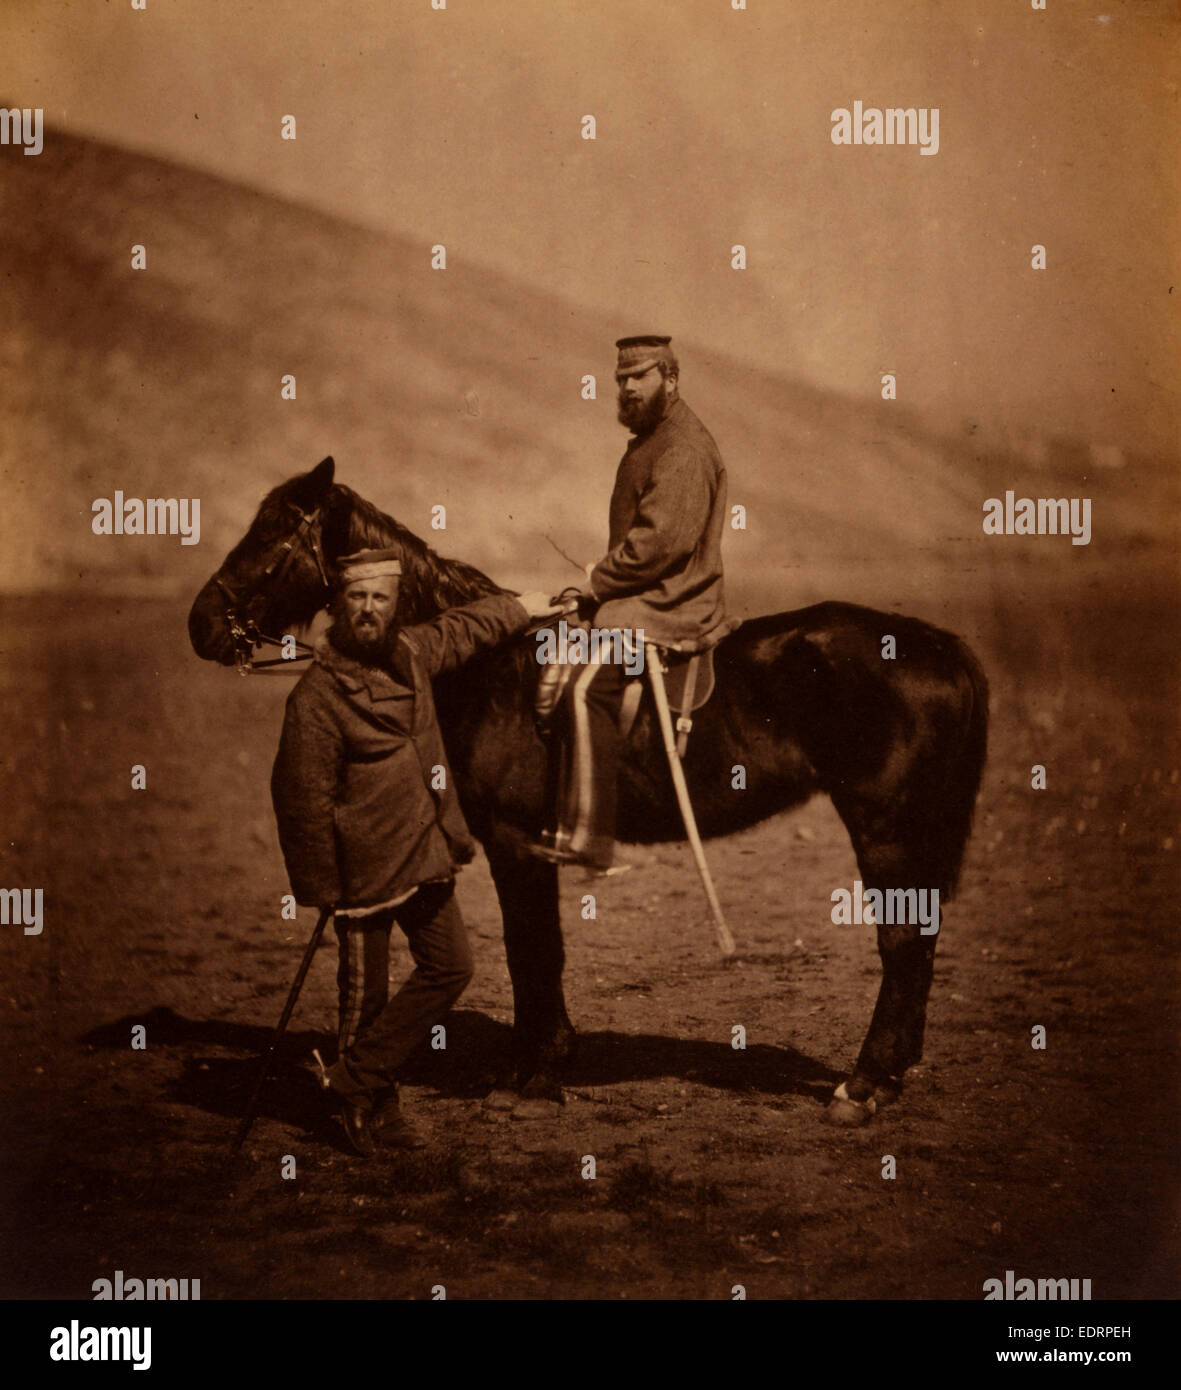 Kapitän Phillips & Leutnant Yates, 8. Husaren, Krimkrieg 1853 – 1856, Roger Fenton historischen Krieg Kampagne Foto Stockfoto